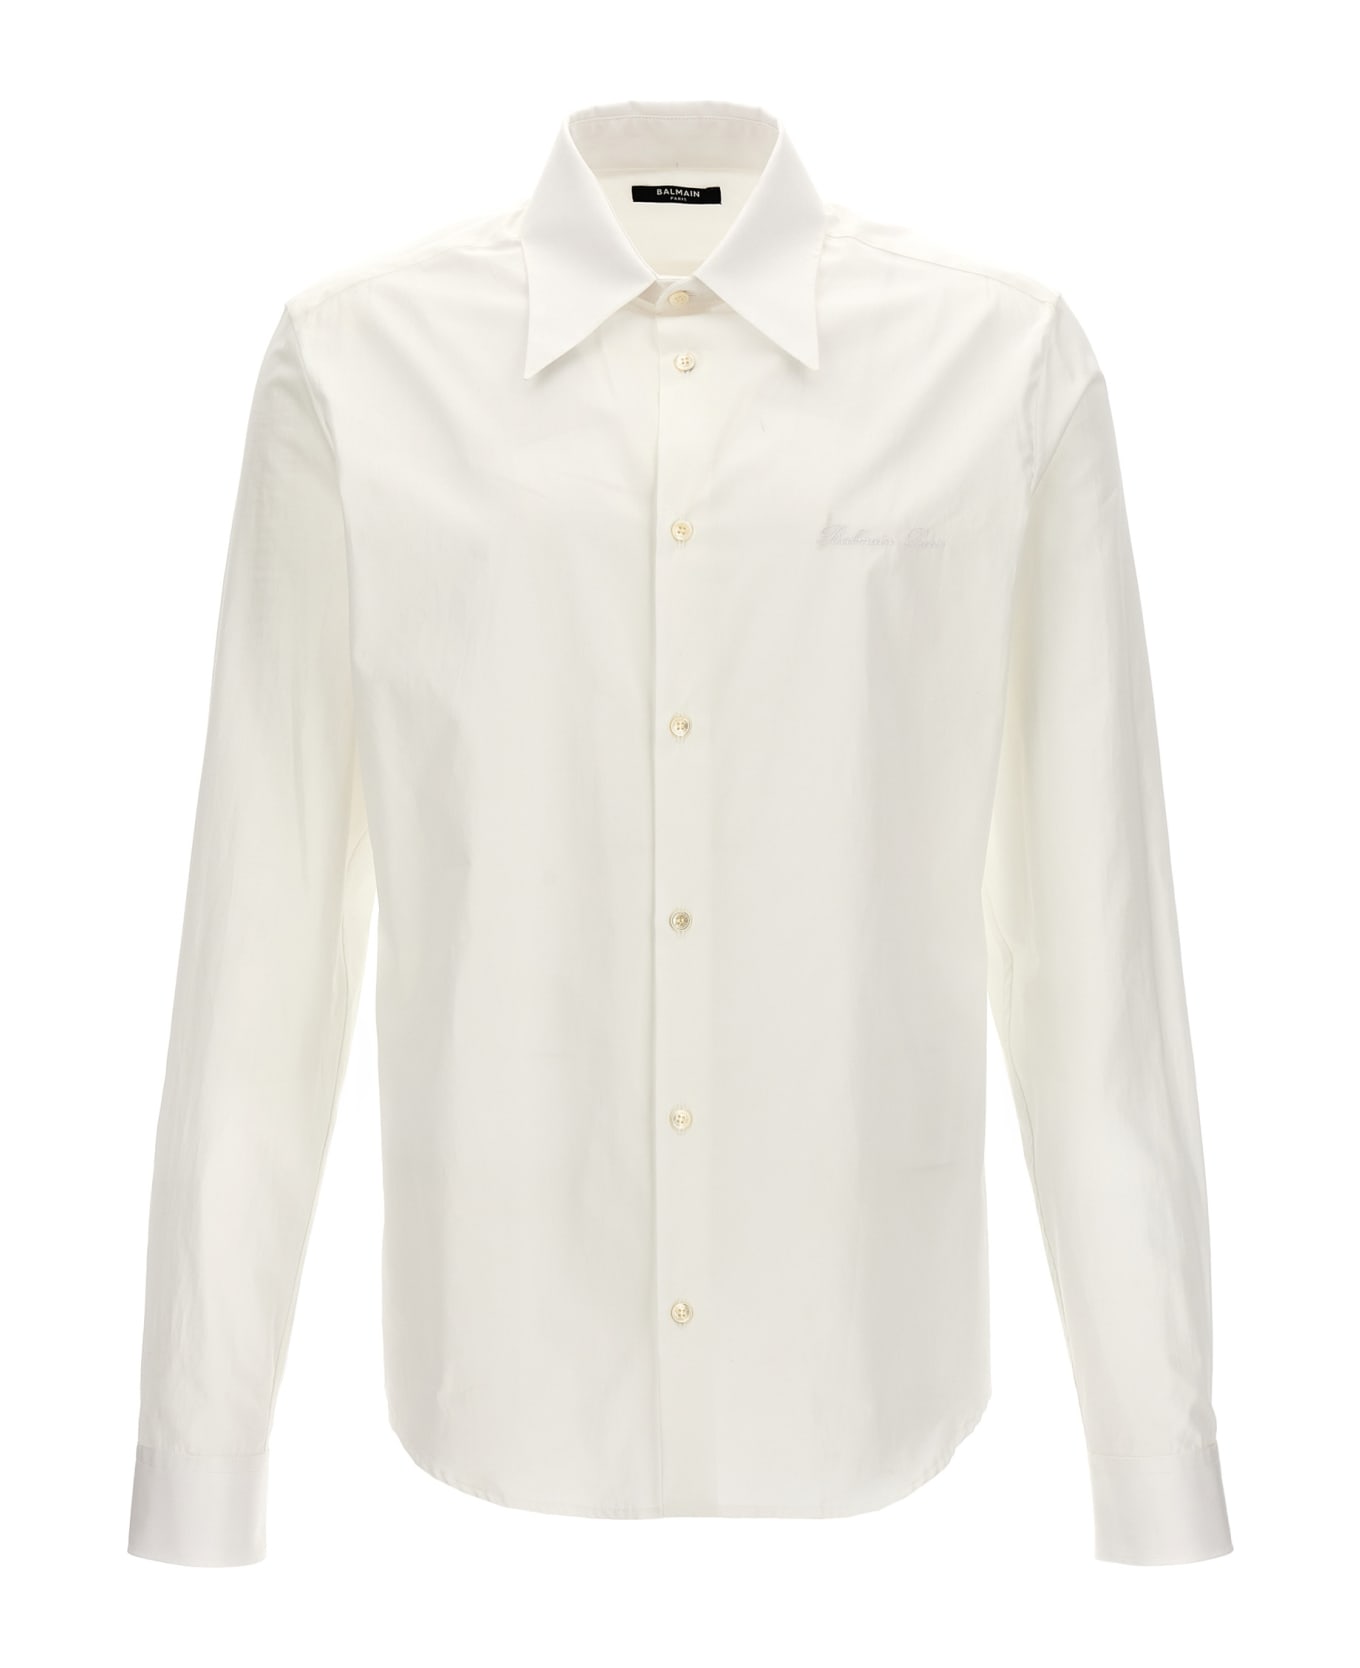 Balmain Logo Embroidery Shirt - White